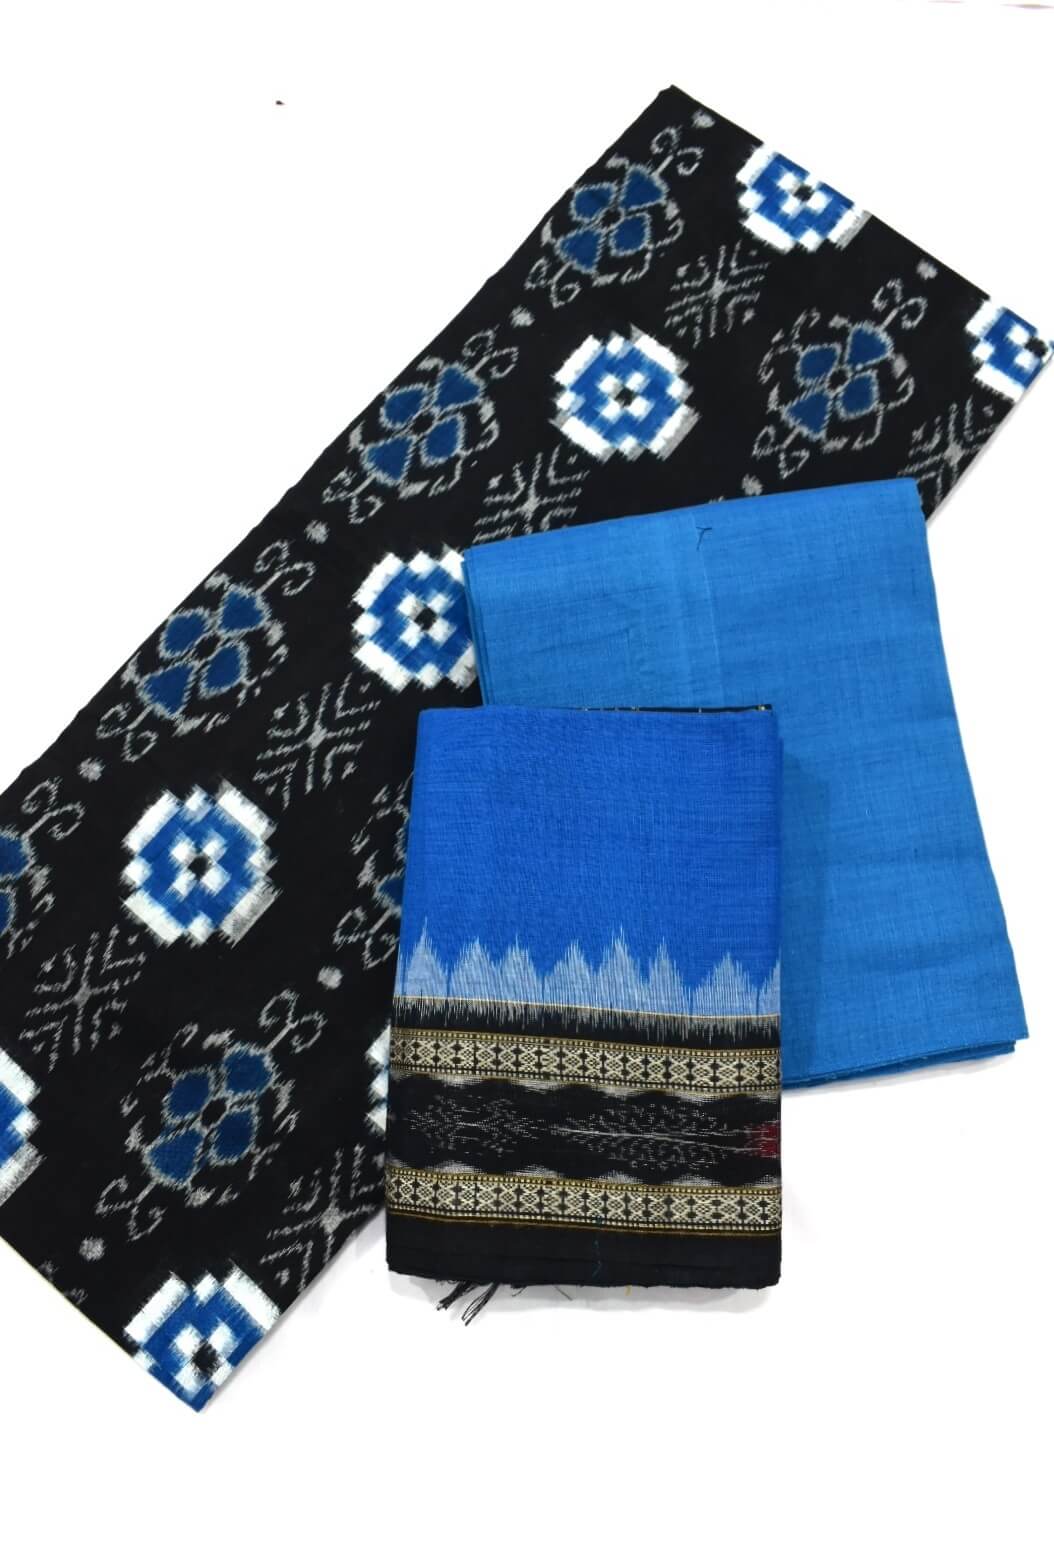 Black Colour Pasapali Design Sambalpuri Handloom Cotton Dress Materials